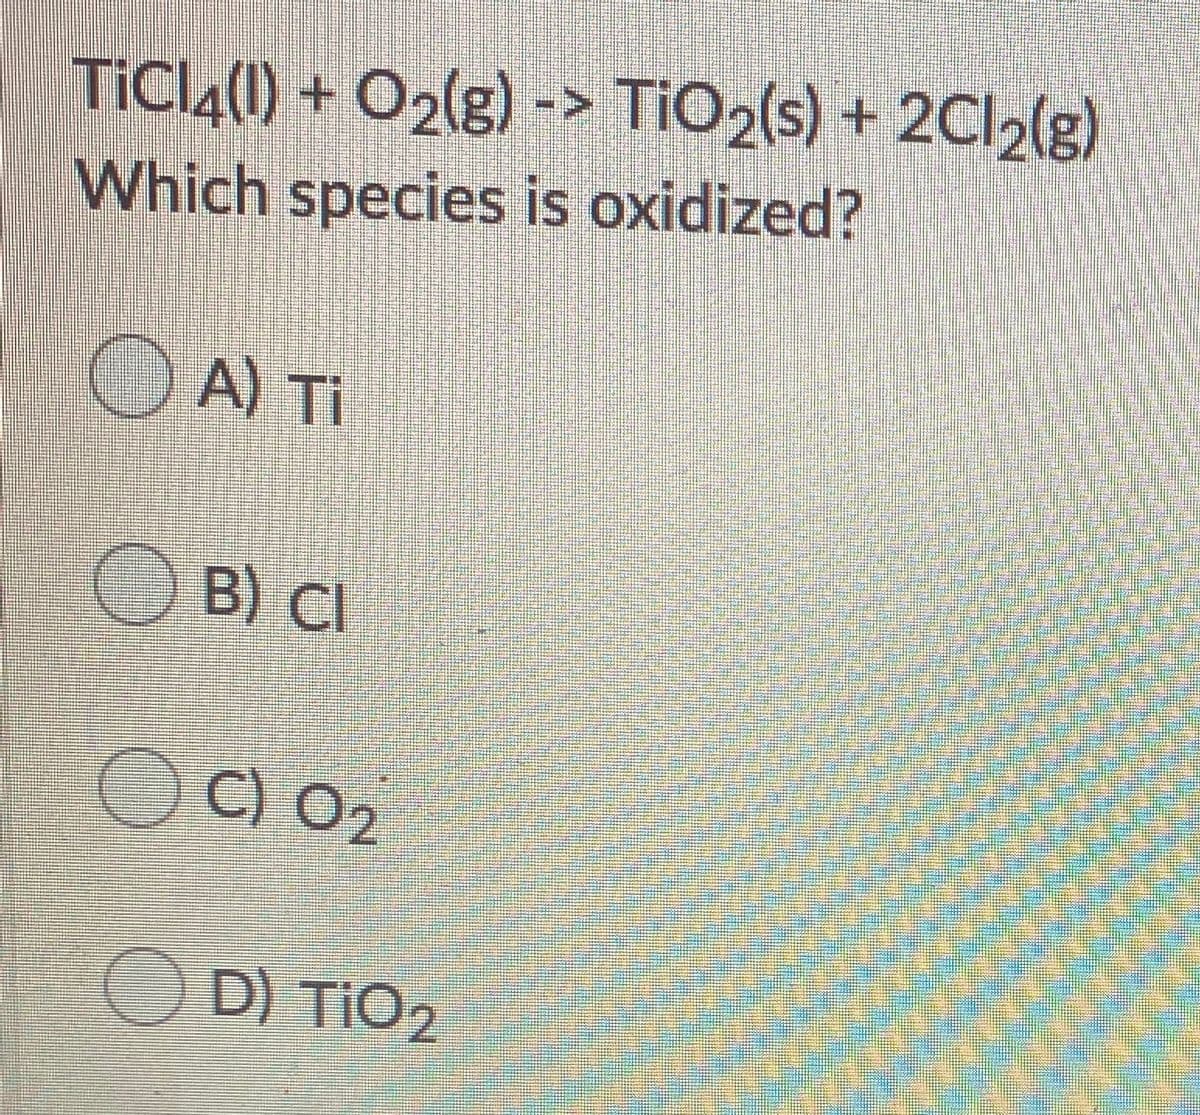 TiCl4(1) + O2(g) -> TiO2(s) + 2CI2(8)
Which species is oxidized?
OA) Ti
O B) CI
OC) 02
O D) TIO2
